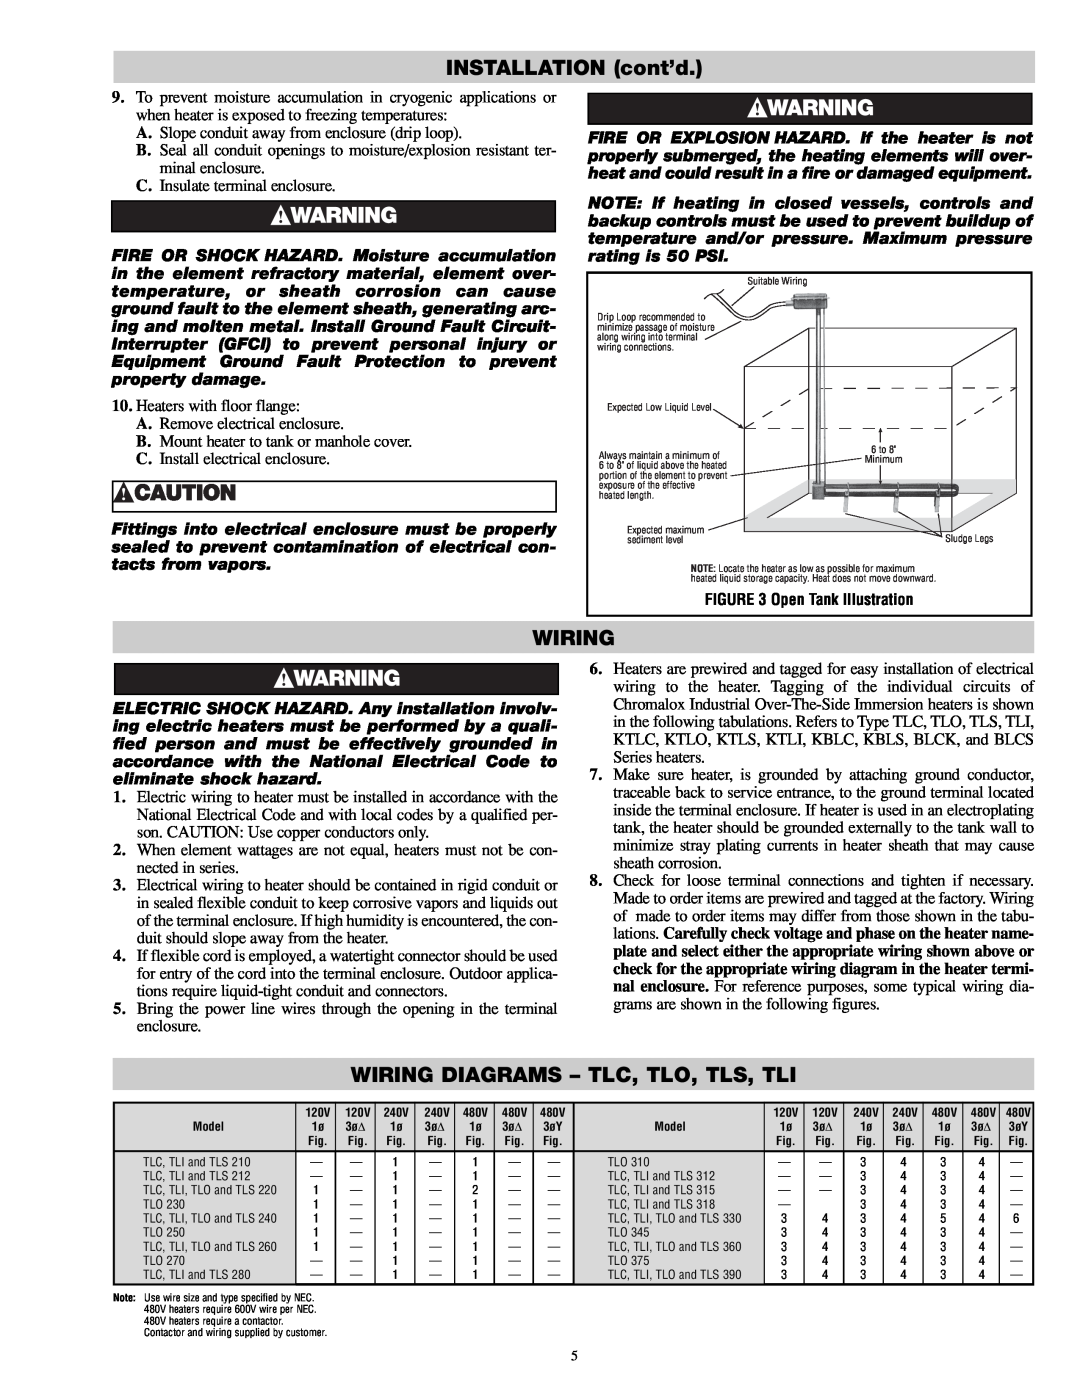 Chromalox PD411-10 installation instructions INSTALLATION cont’d, Wiring Diagrams - Tlc, Tlo, Tls, Tli 